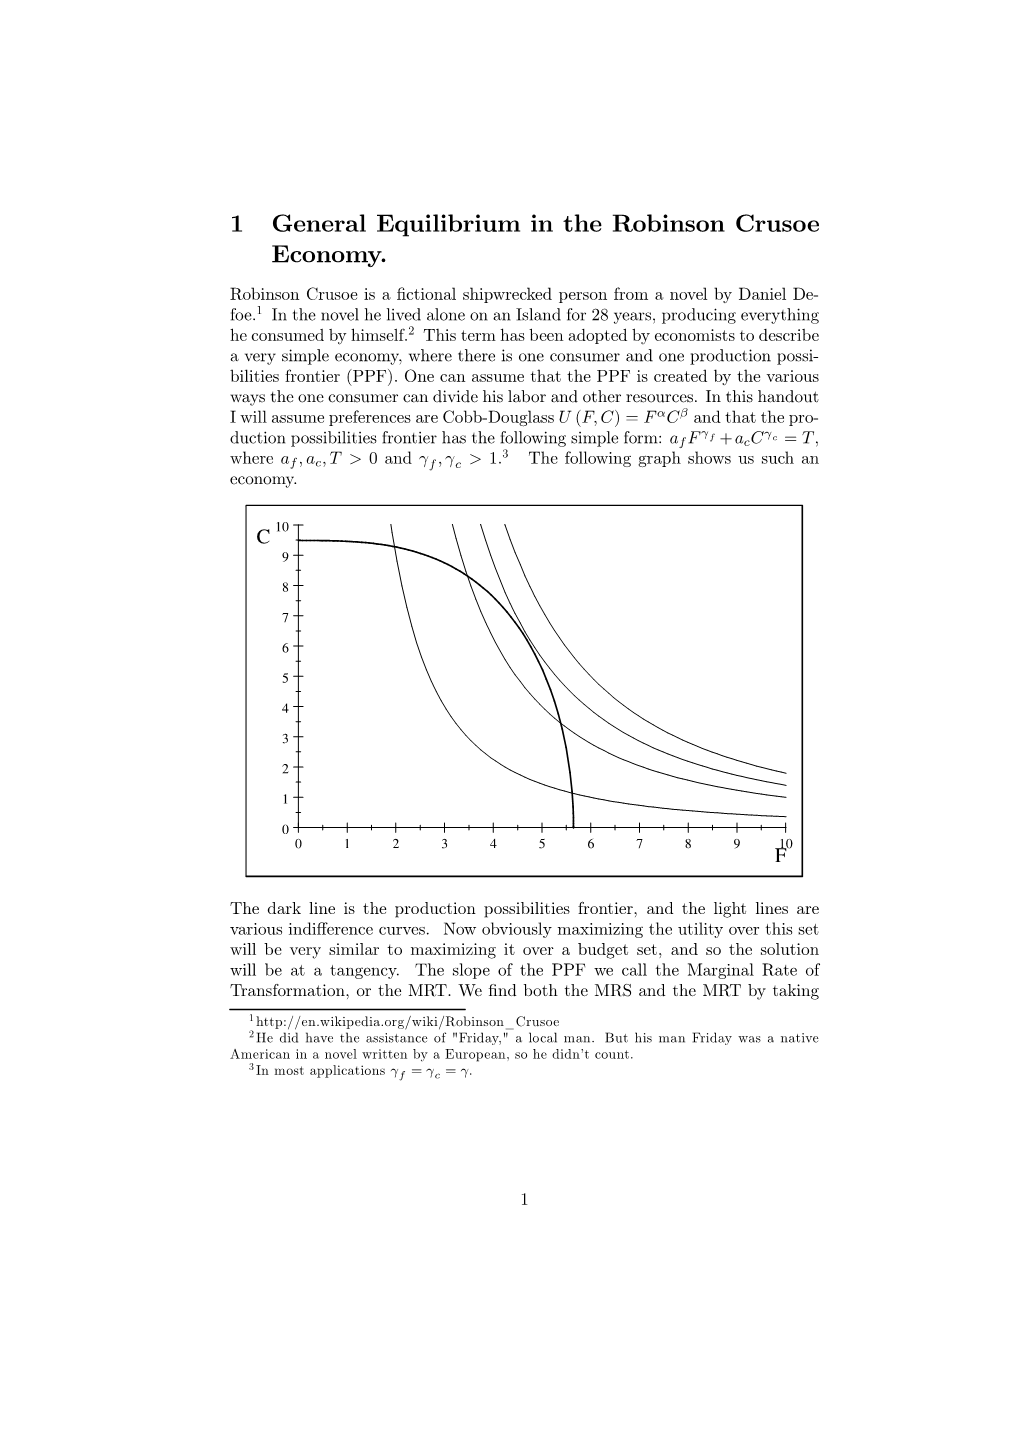 1 General Equilibrium in the Robinson Crusoe Economy